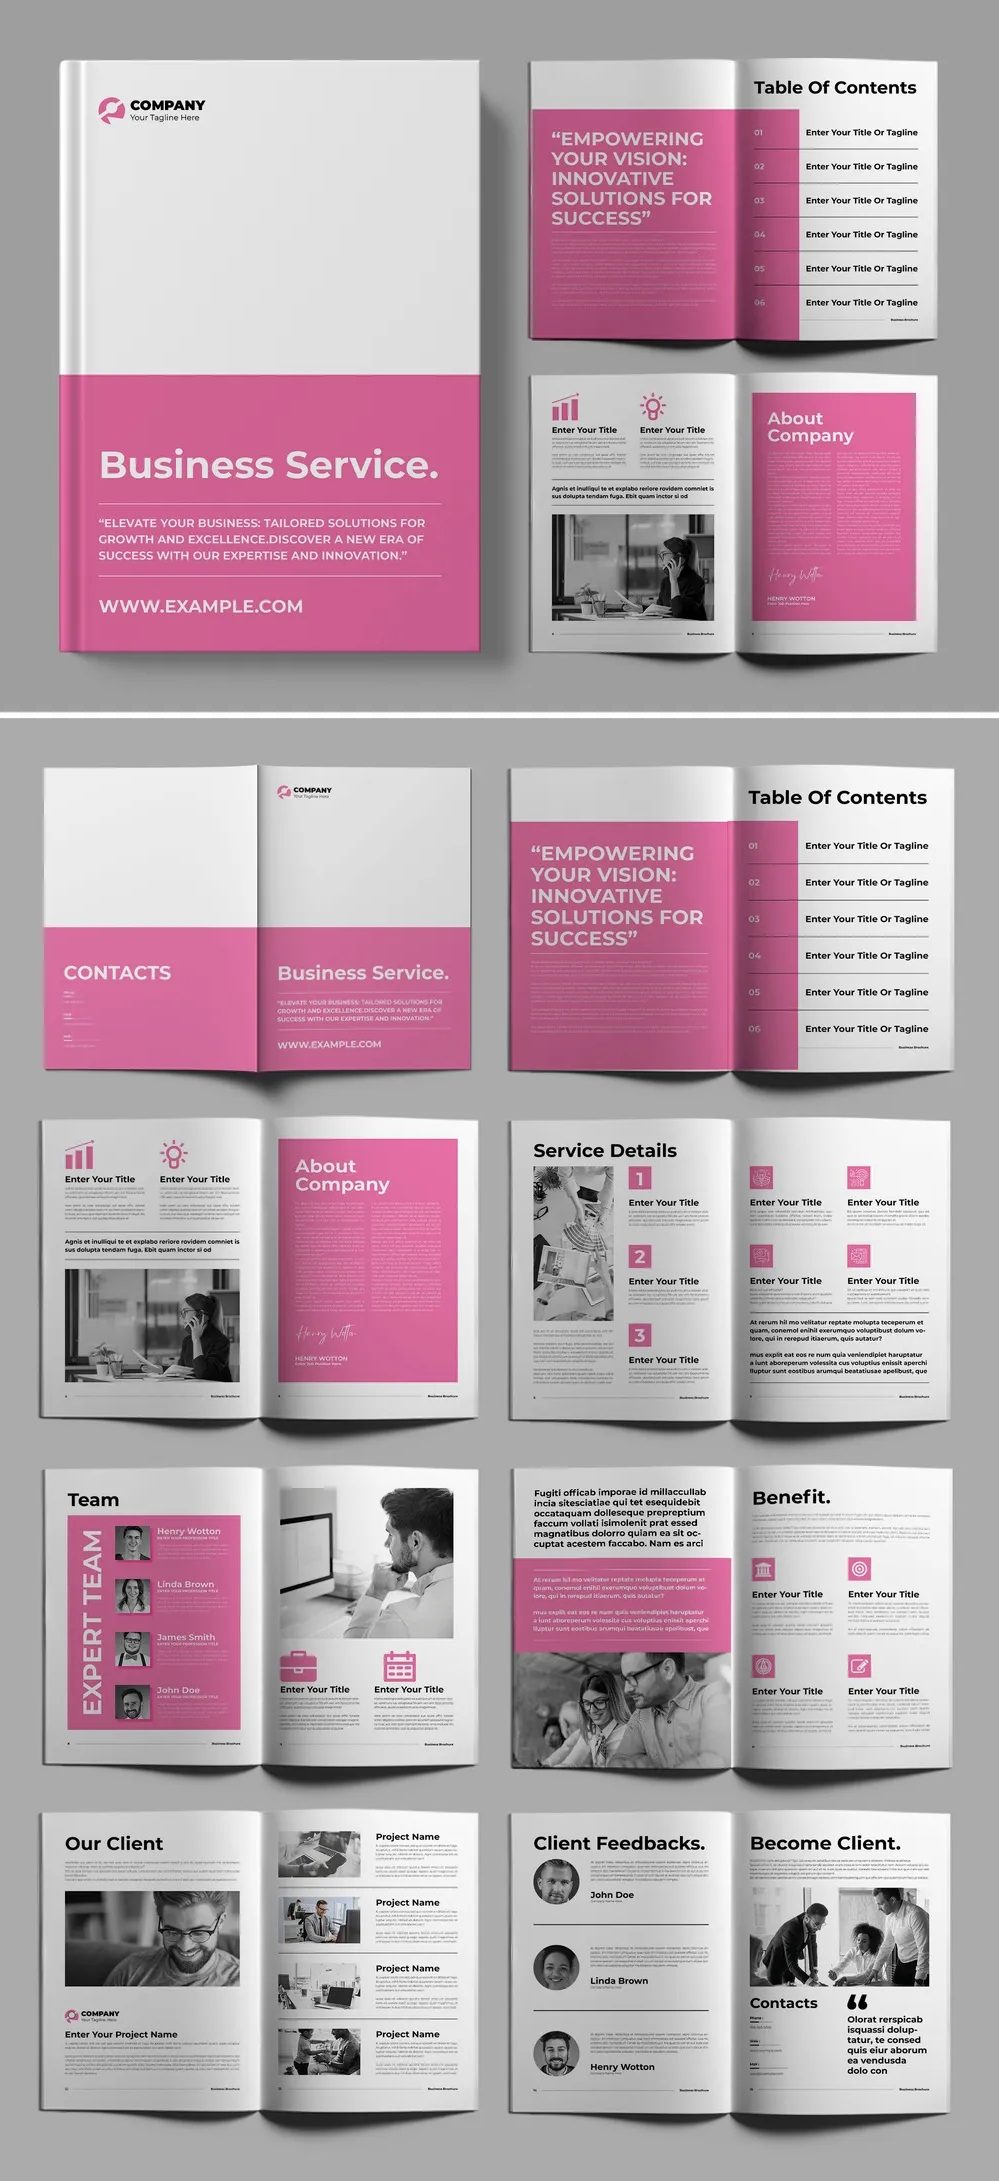 Adobestock - Business Brochure Template 718545556